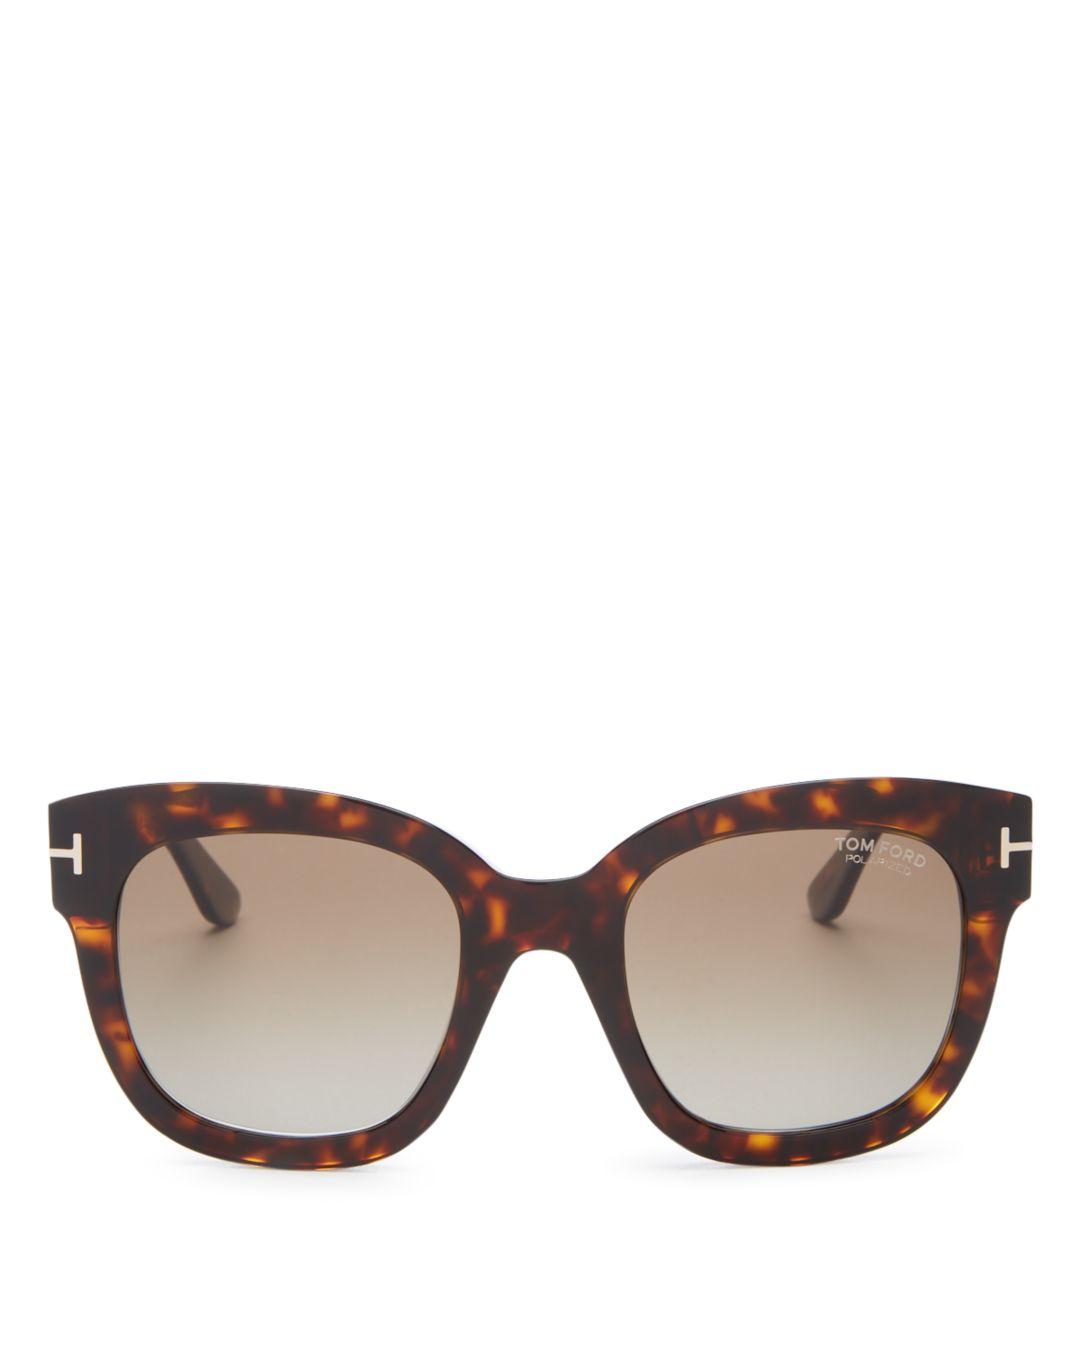 Tom Ford Women's Beatrix Polarized Square Sunglasses in Brown - Lyst